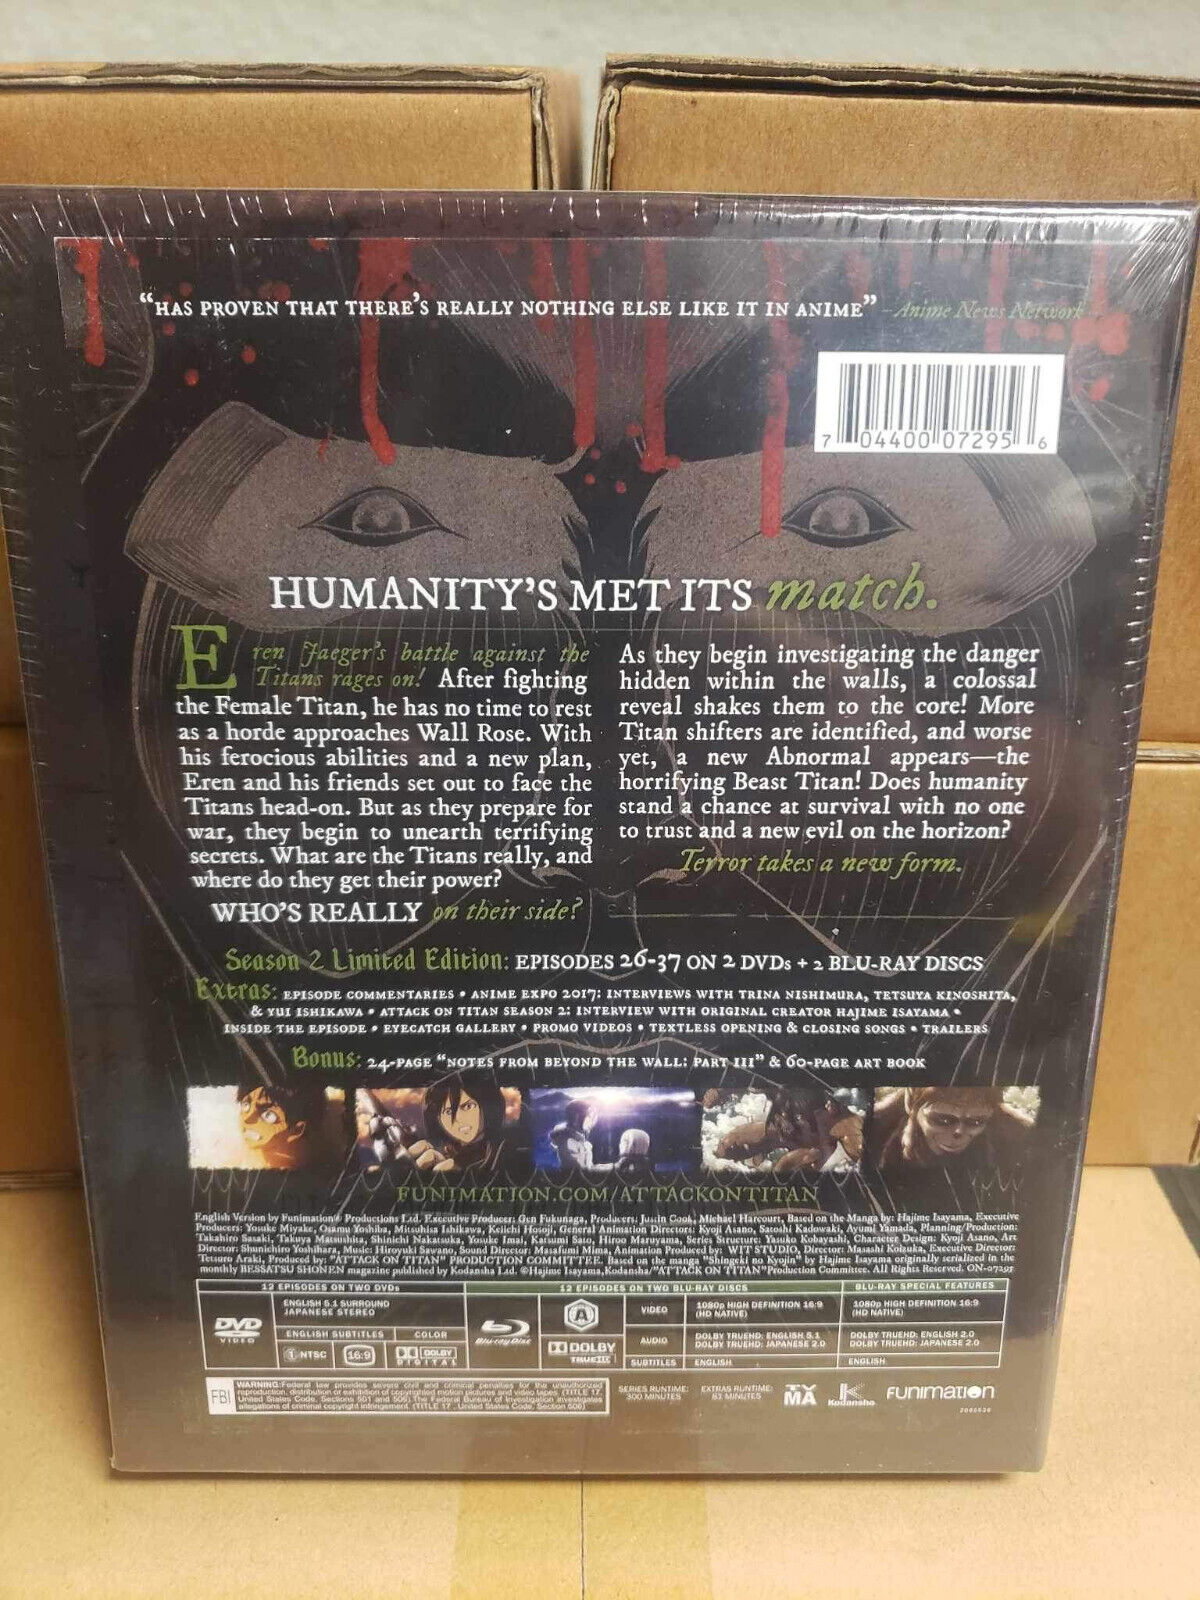 Attack on Titan: Final Season - Part 2 - Limited Edition Blu-ray + DVD